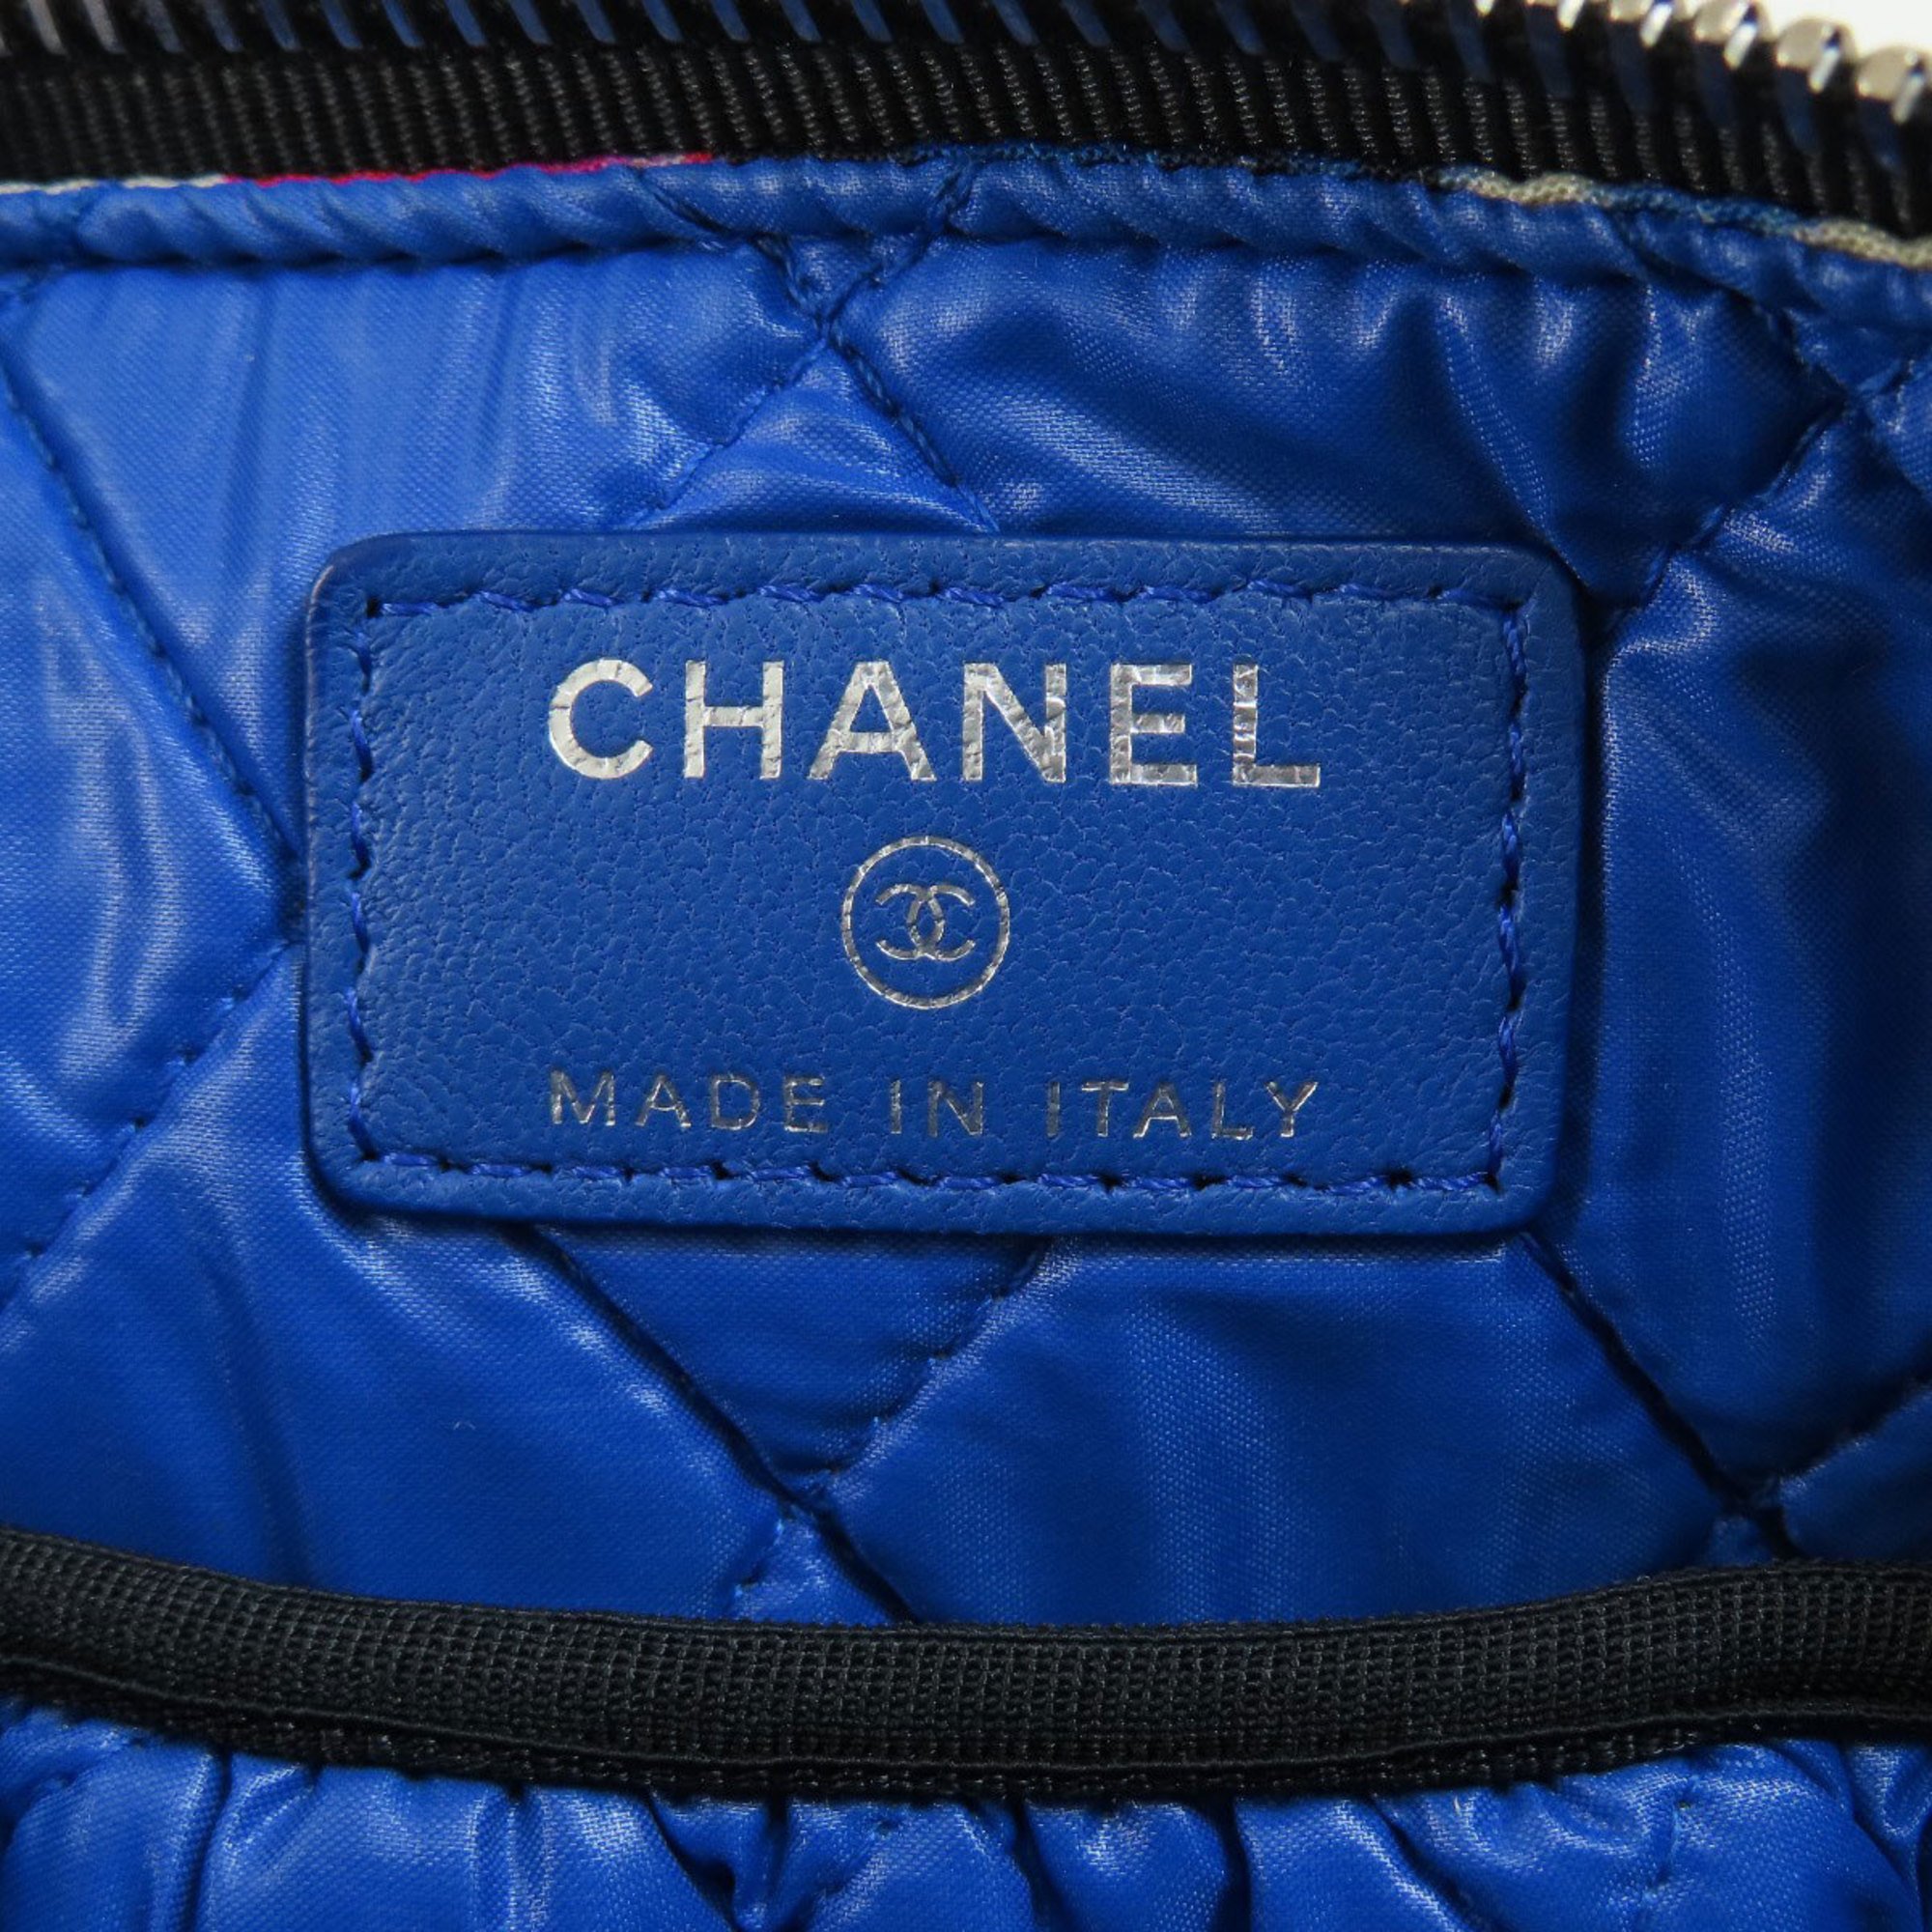 Chanel Check Pattern Nylon Material Women's